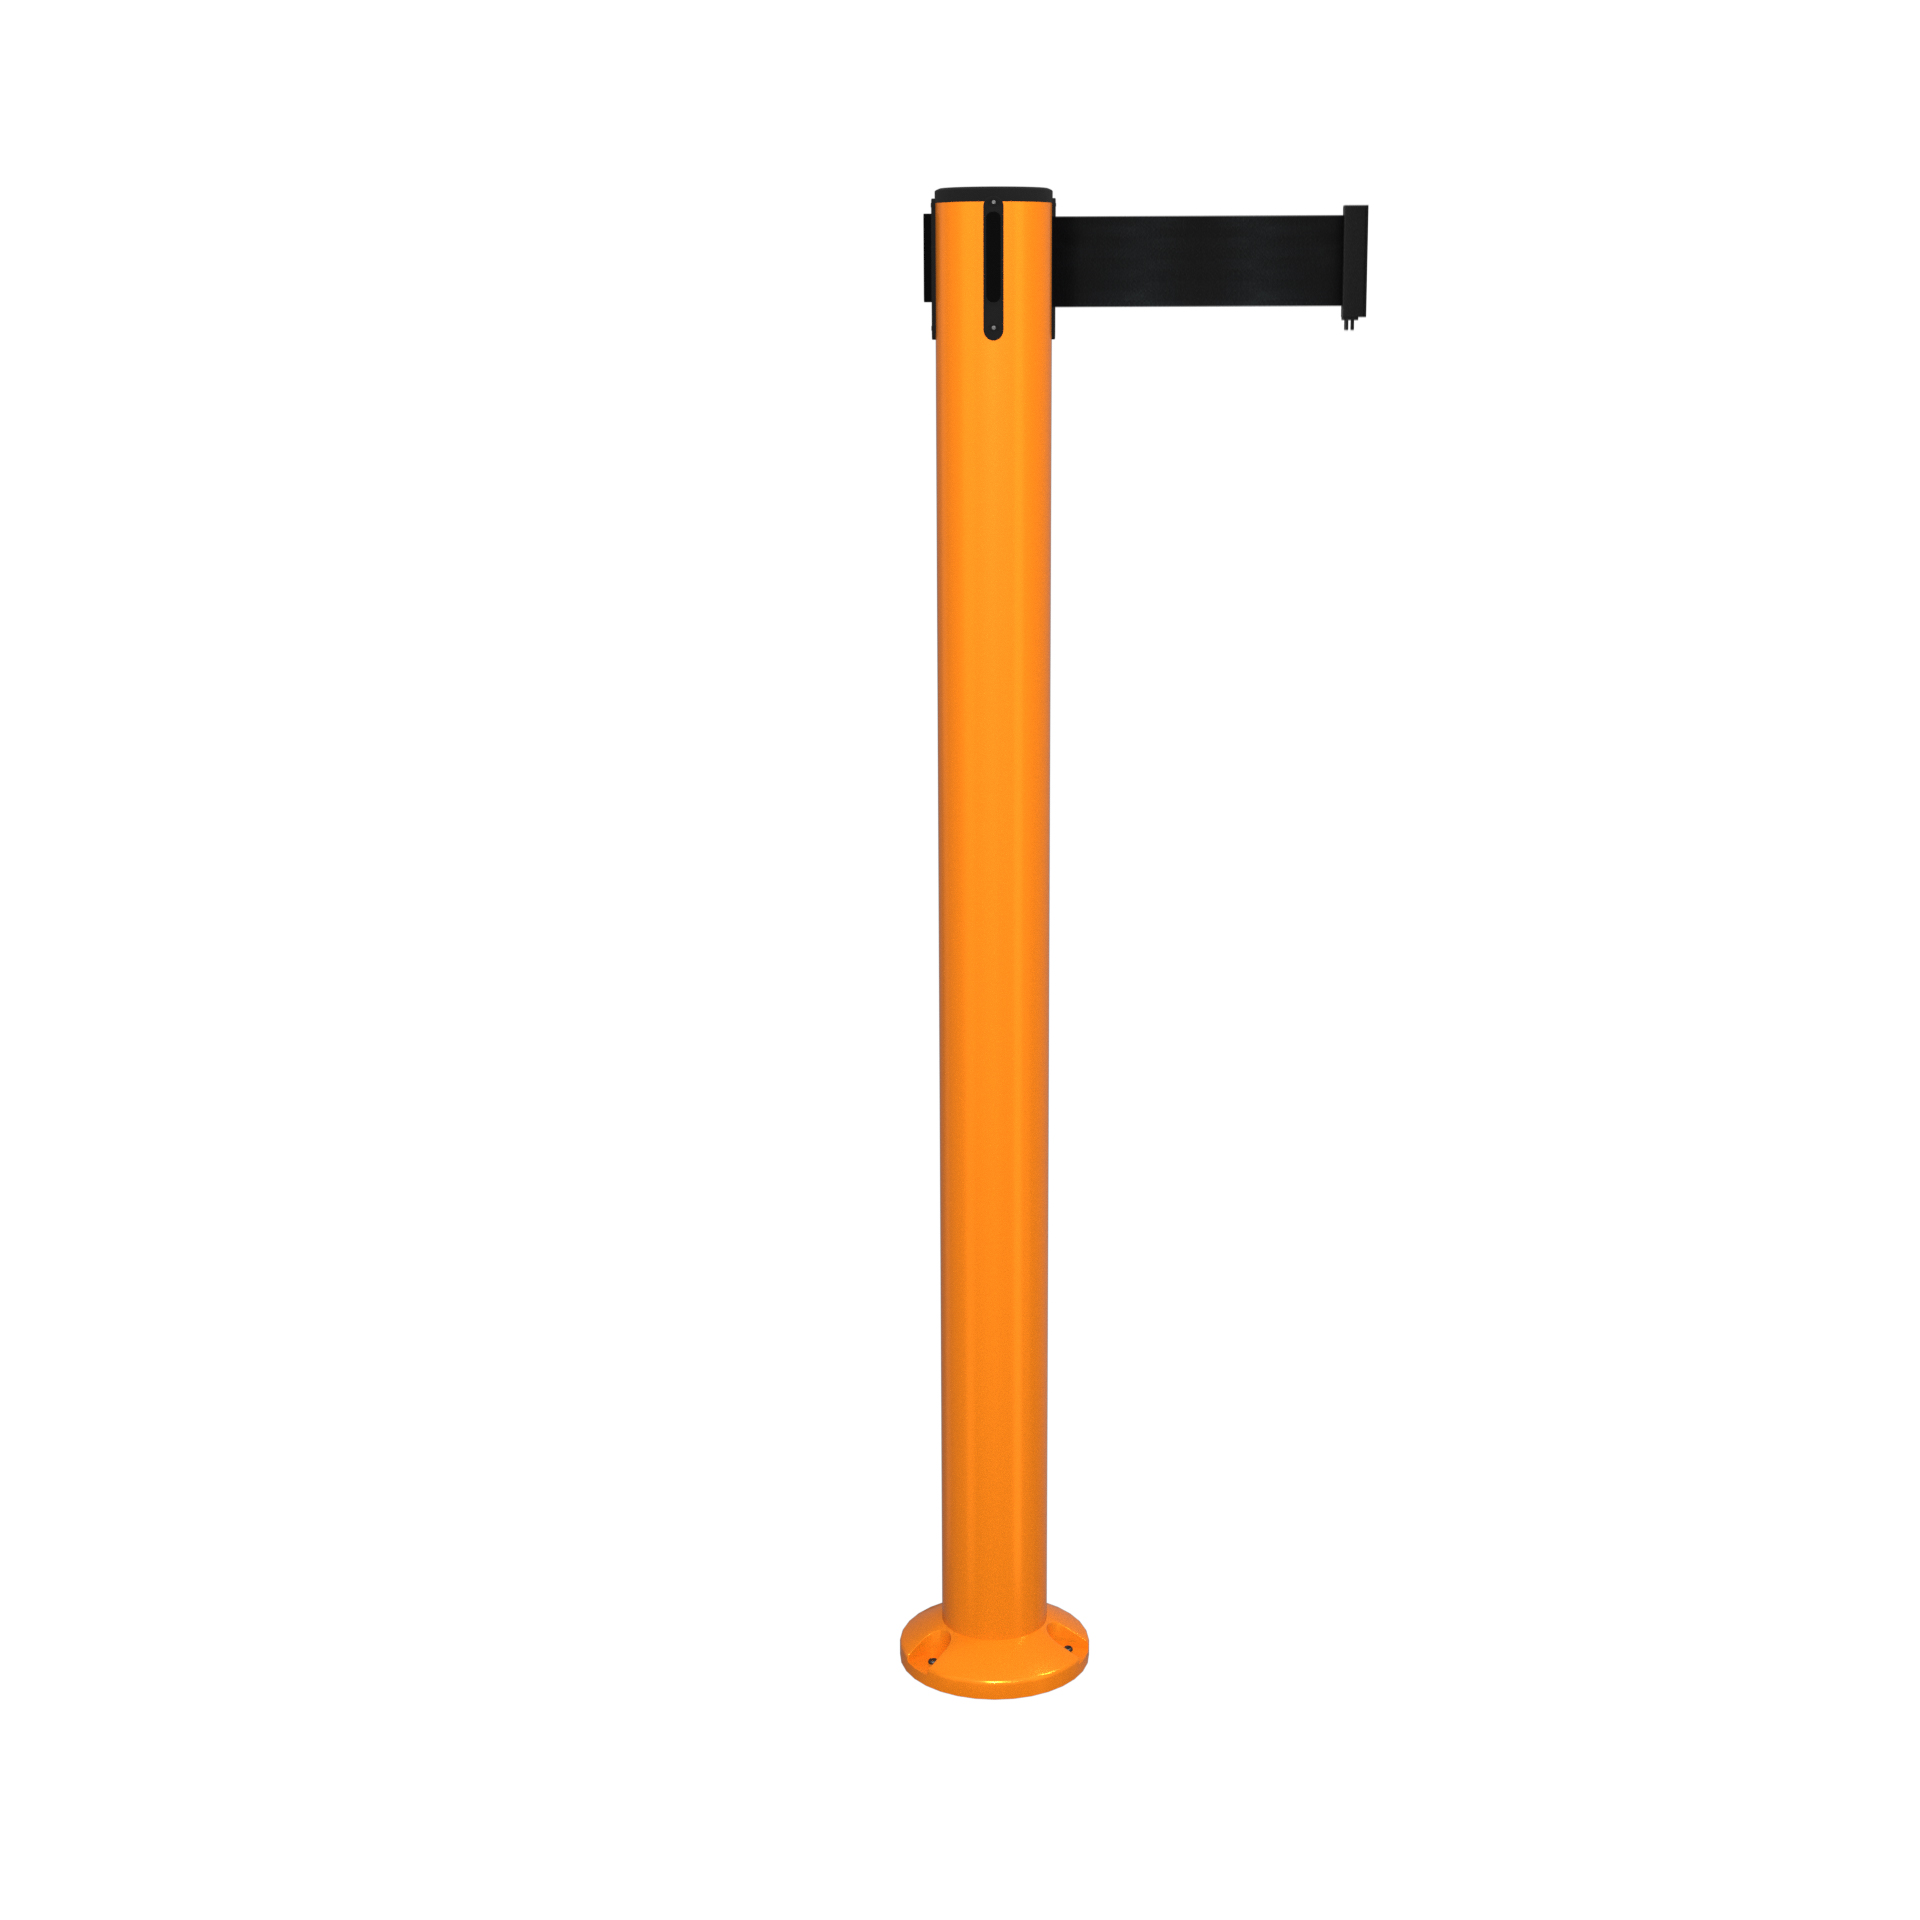 Orange SafetyPro 300 Fixed Retractable Belt Barrier